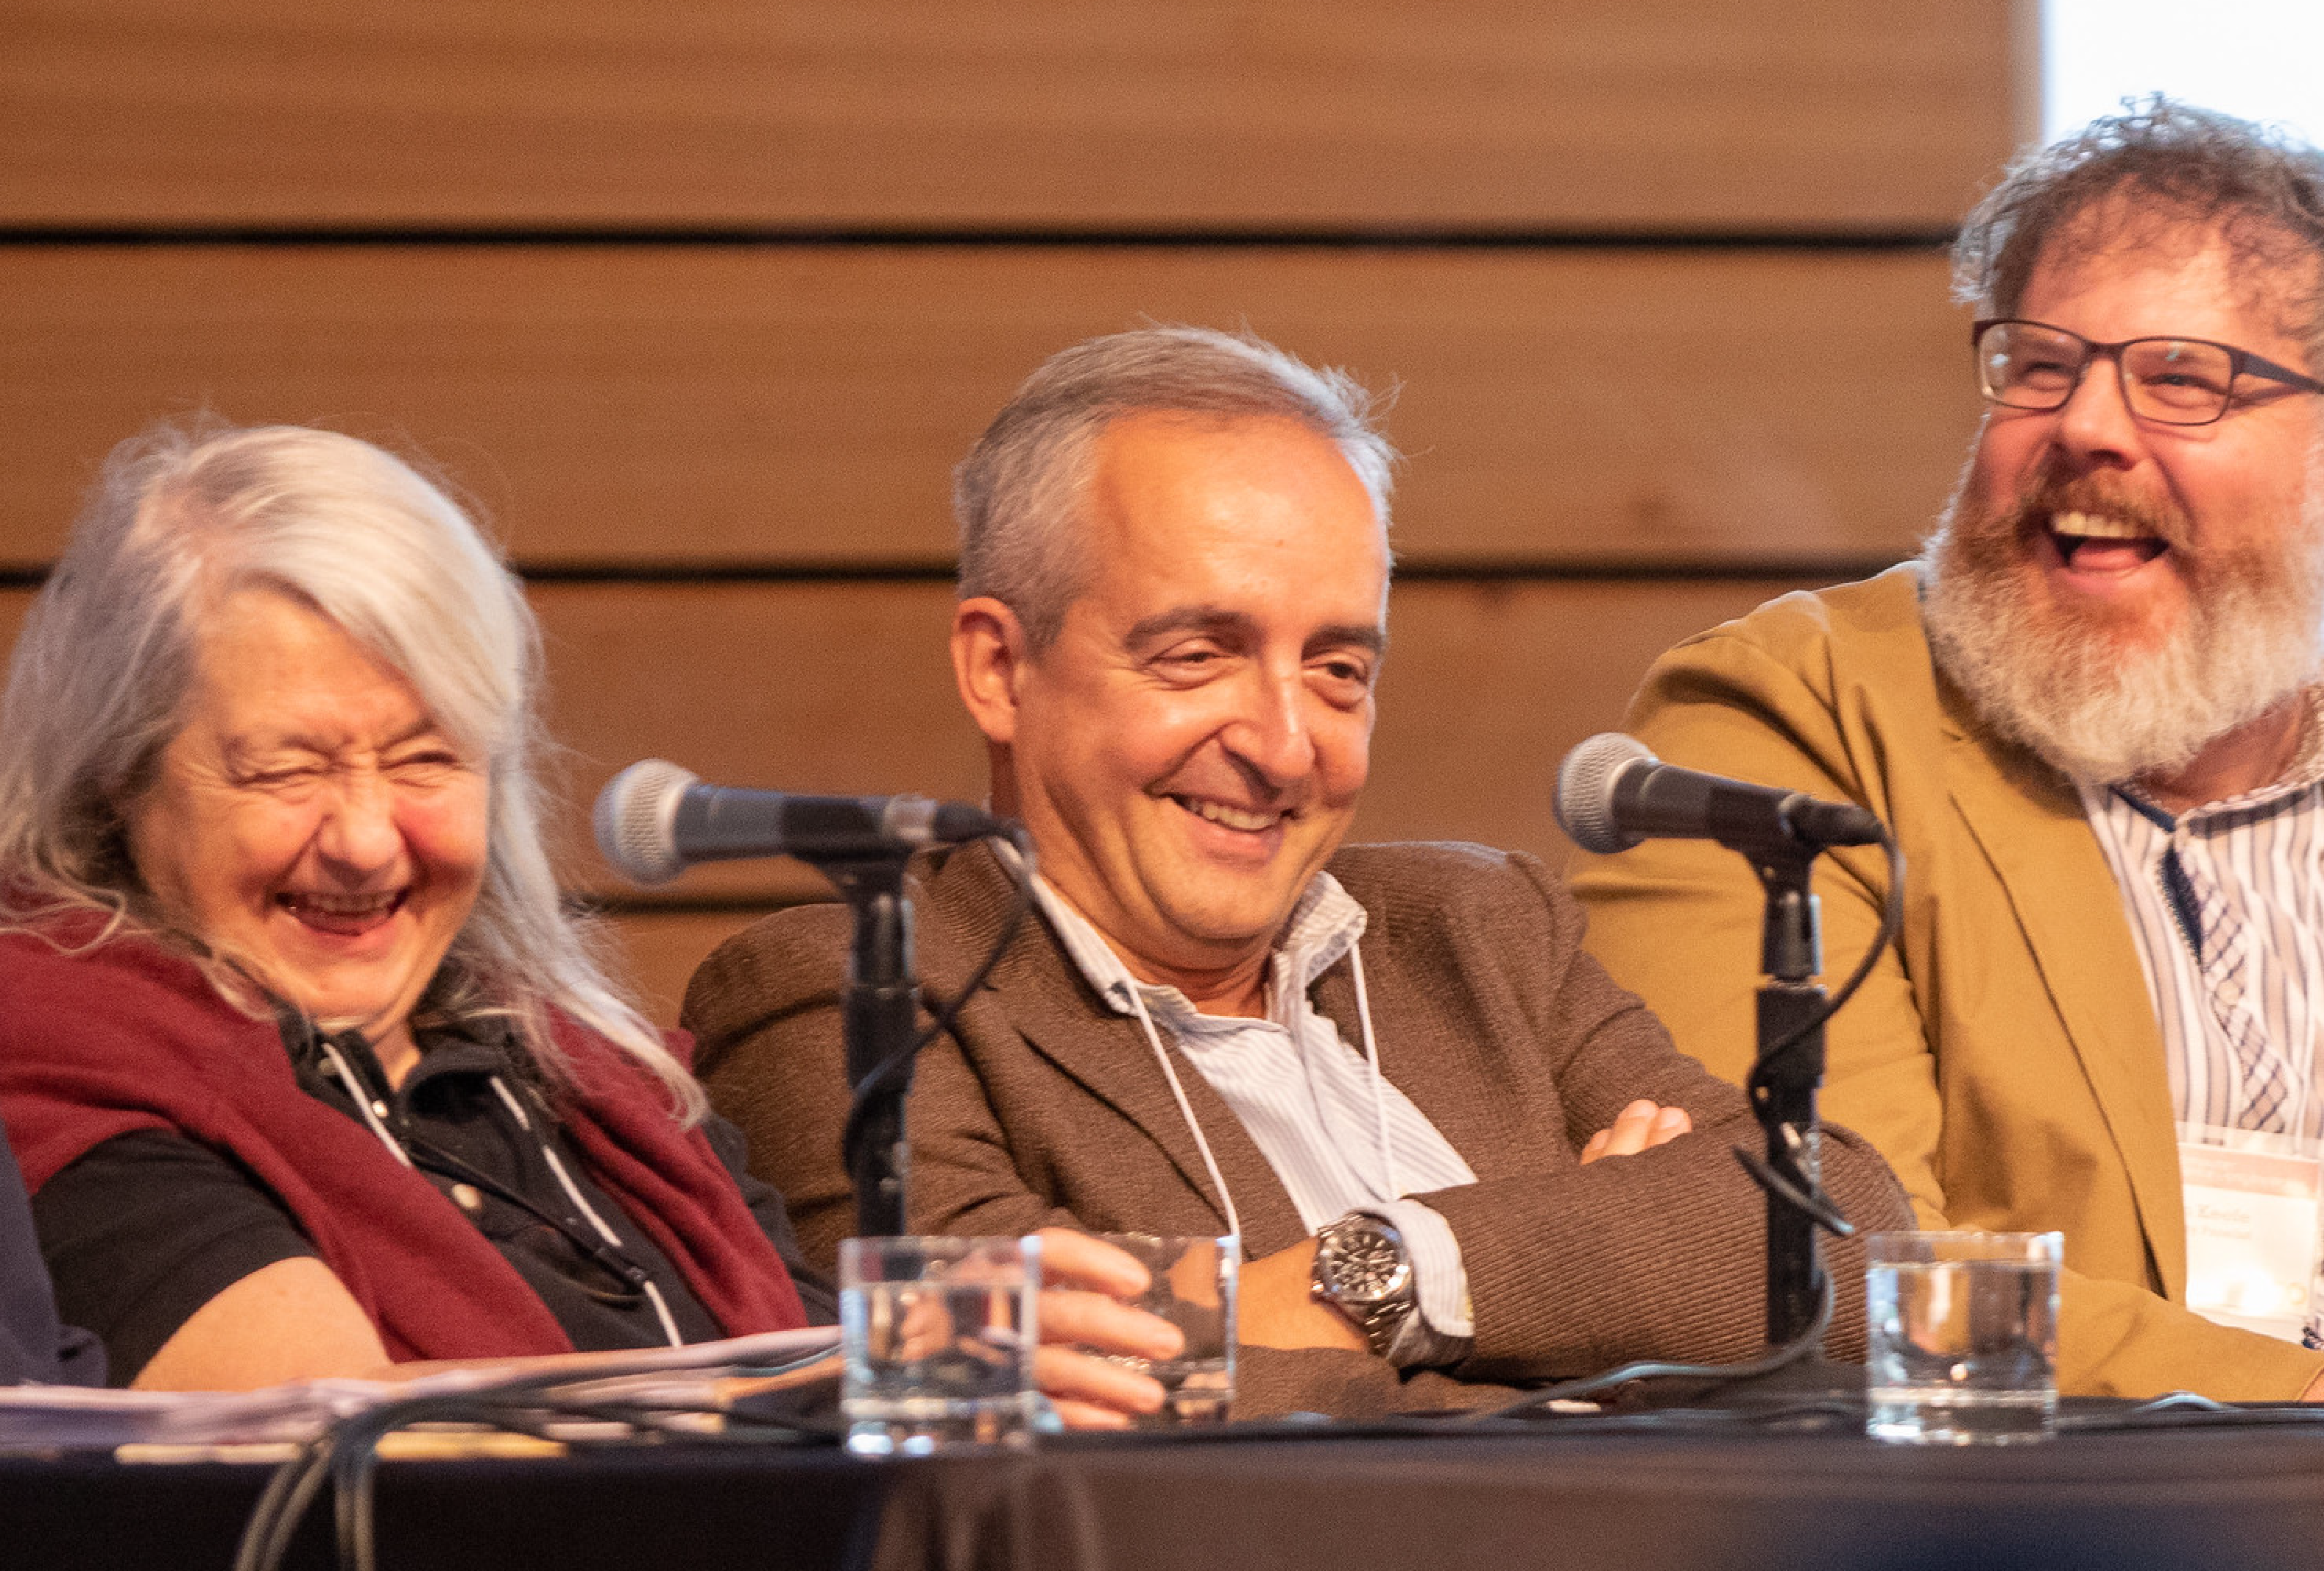 Maria Gini, Nikolaos Papanikolopoulos and Daniel F. Keefe laugh together